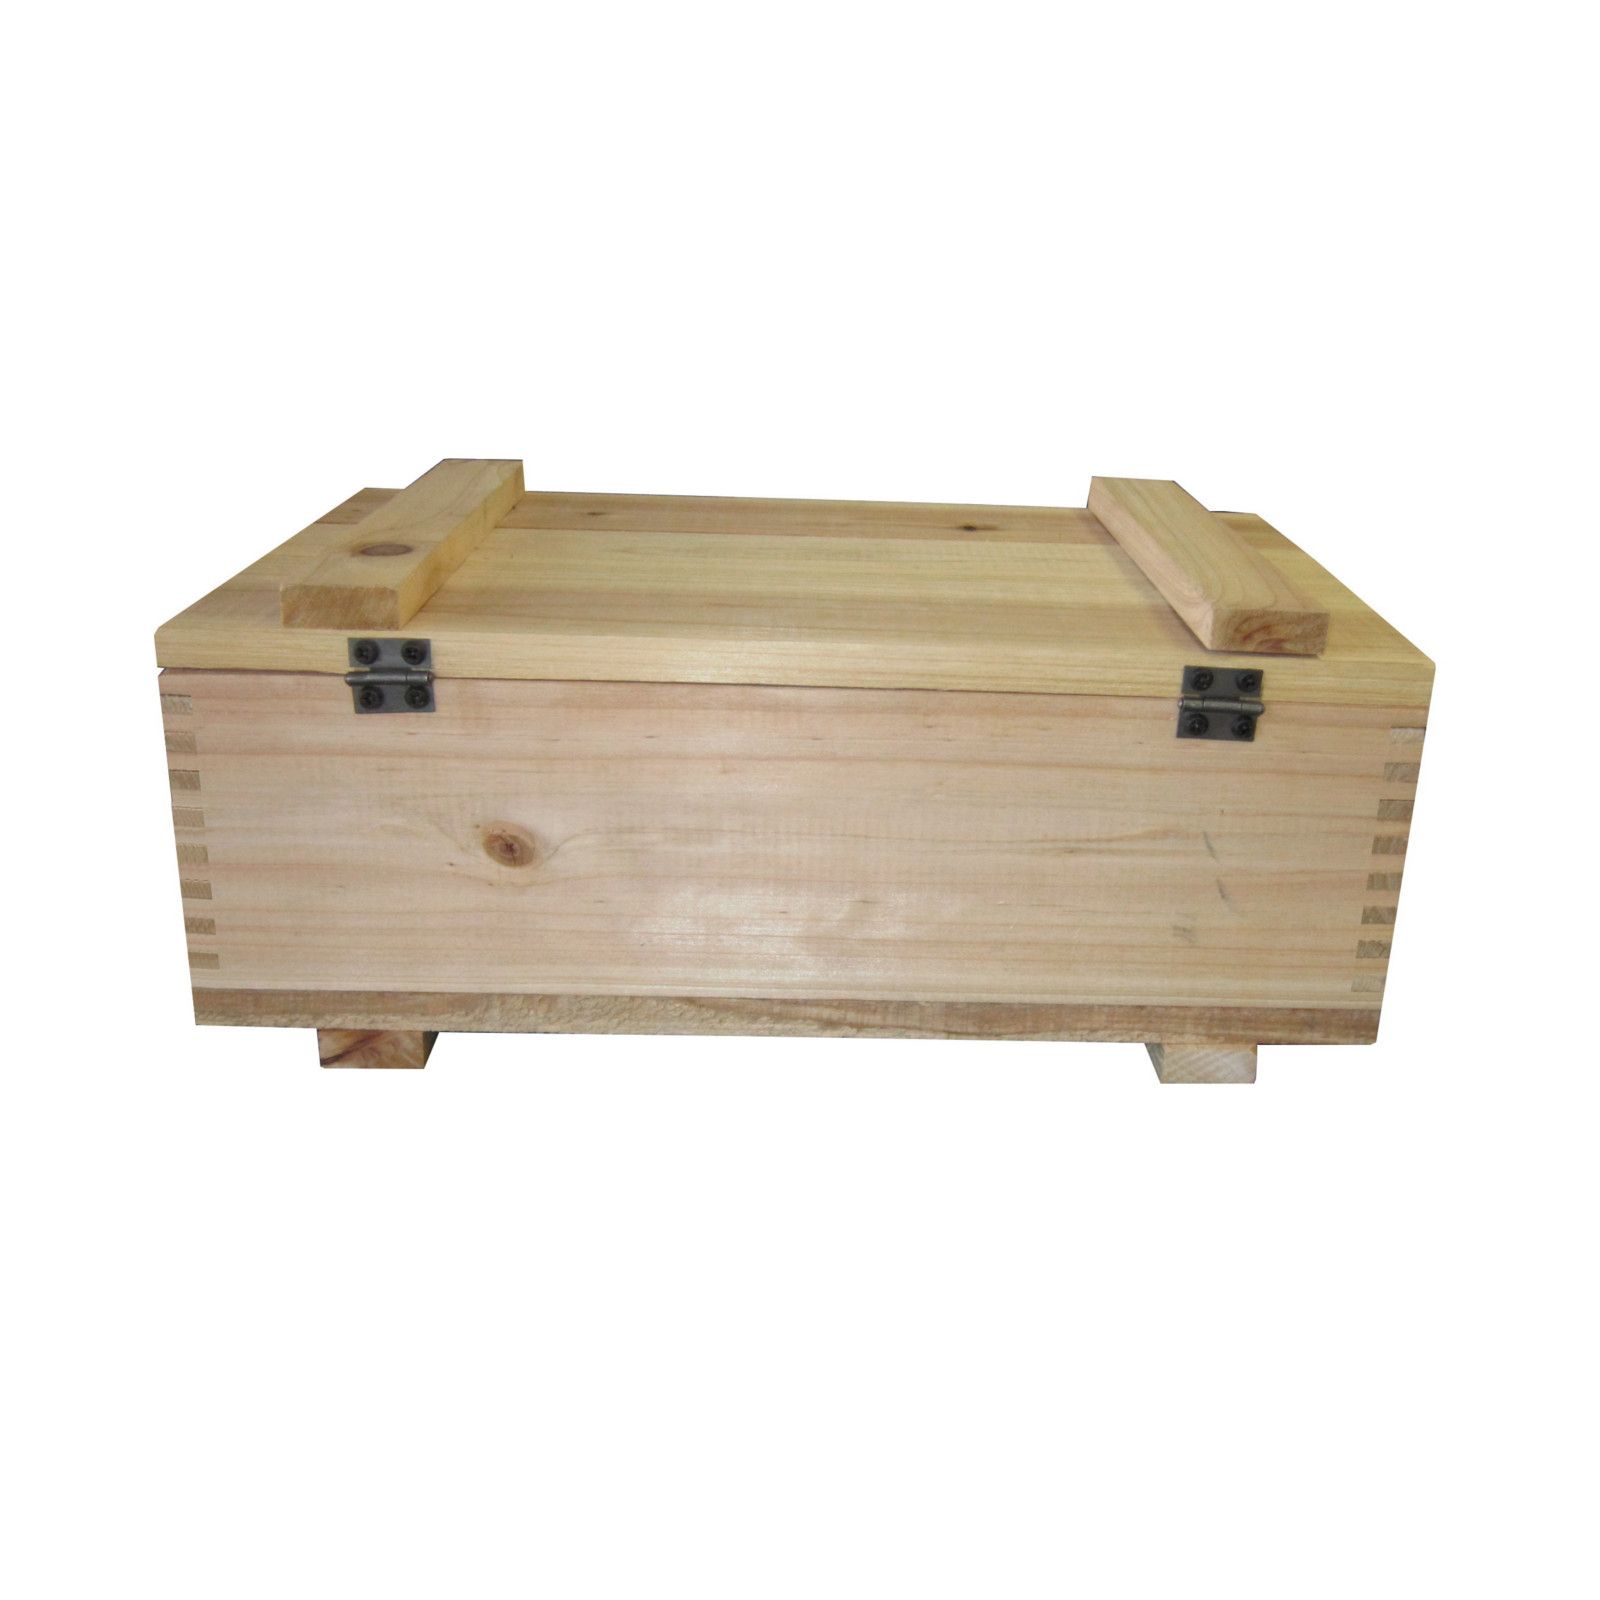 Cedar deck box